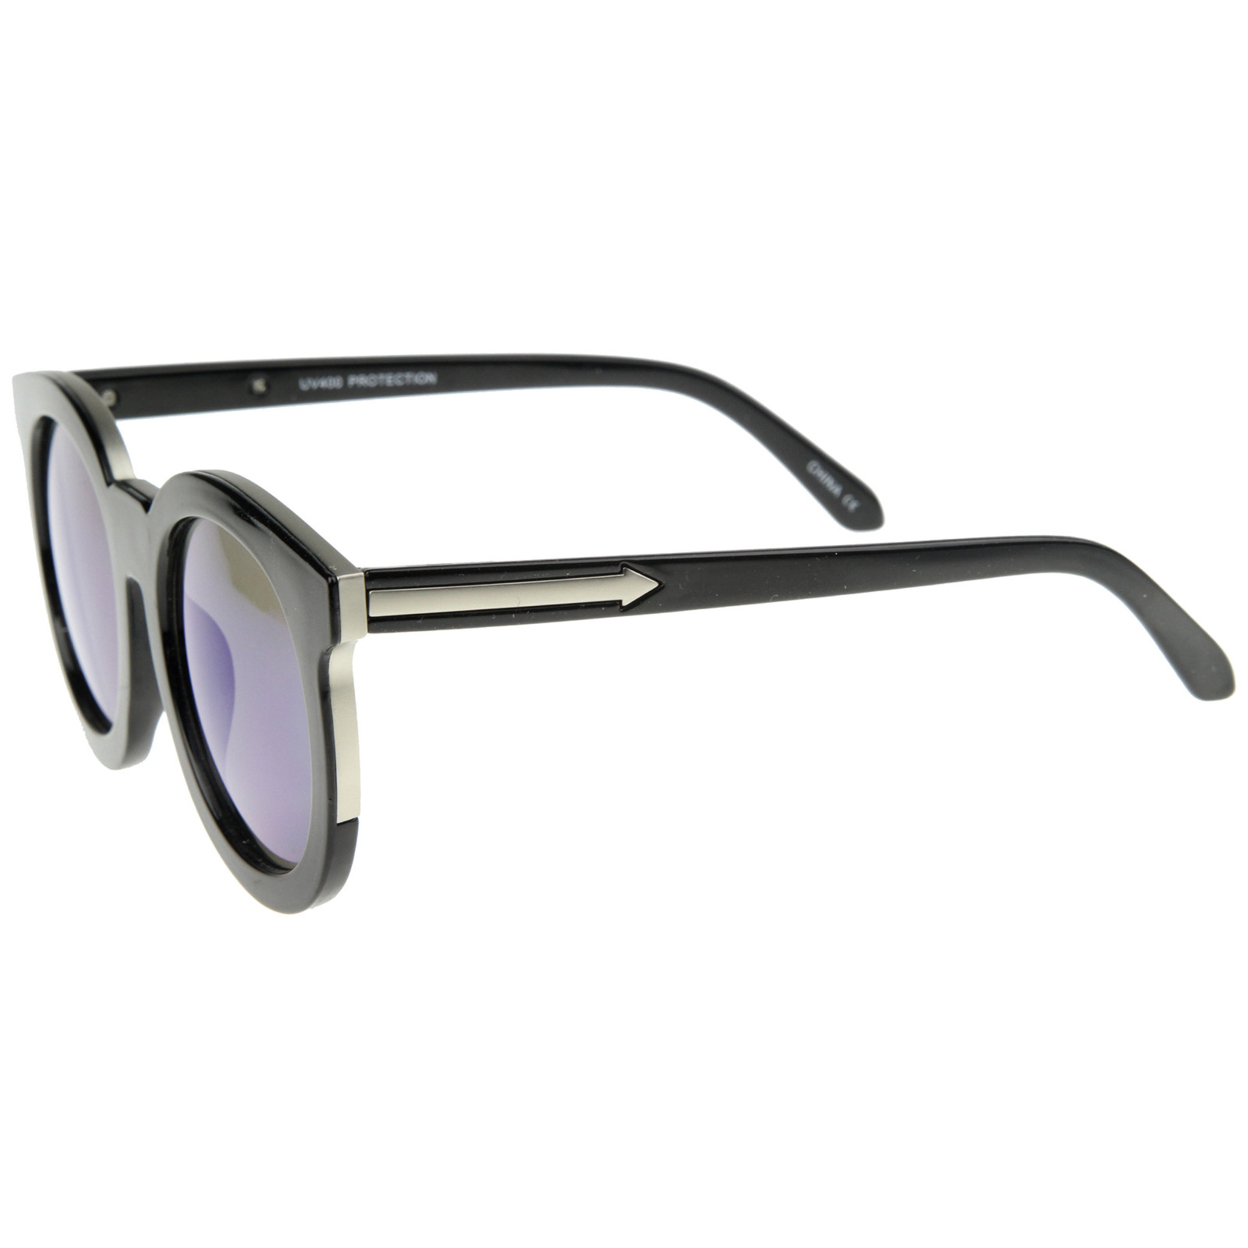 Women's Fashion Oversized Flash Mirrored Flat Lens Round Sunglasses 64mm - Shiny Tortoise-Gold / Violet Mirror